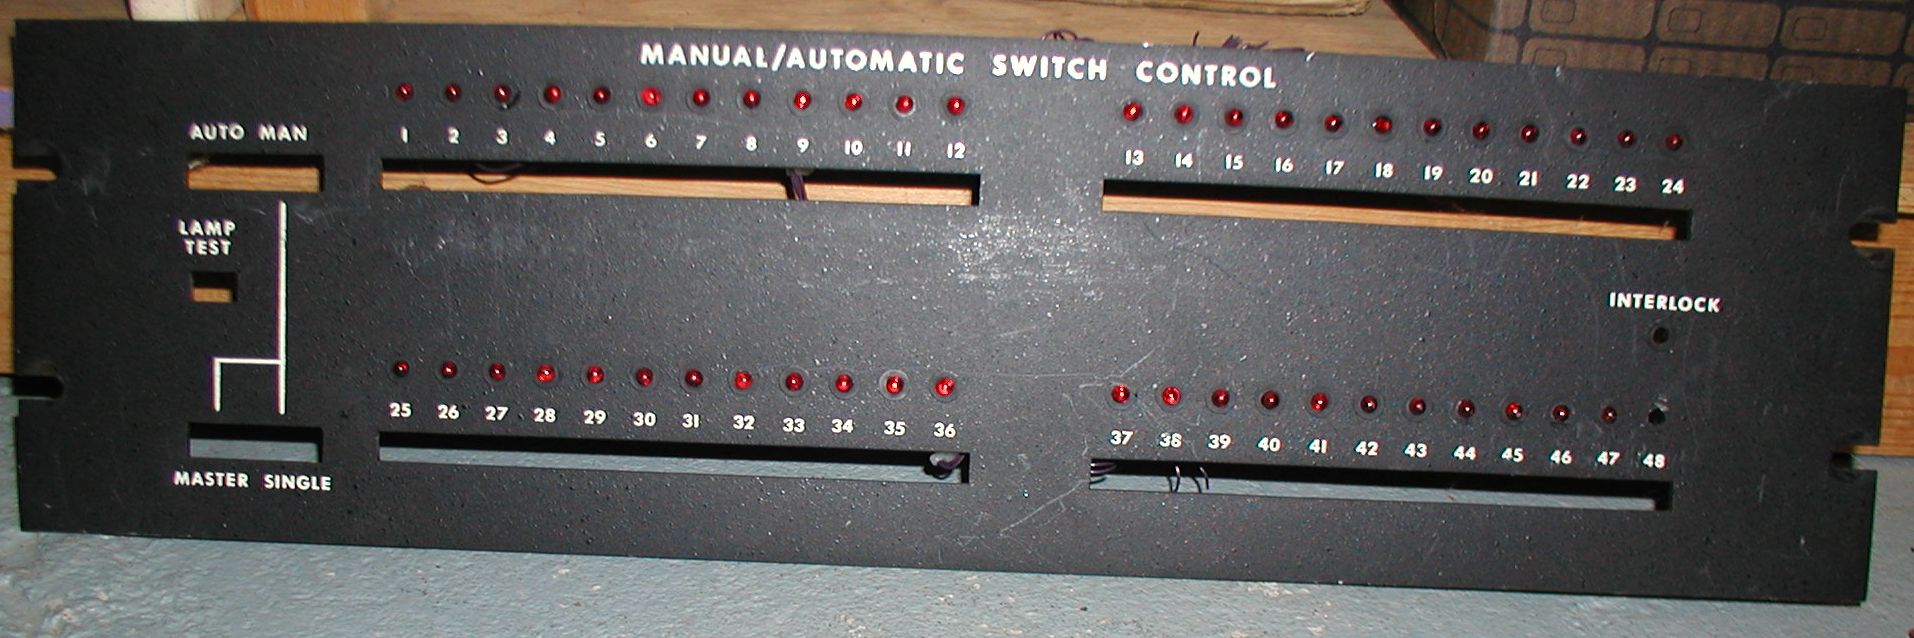 Manual-Automatic-Switch-Control.jpg